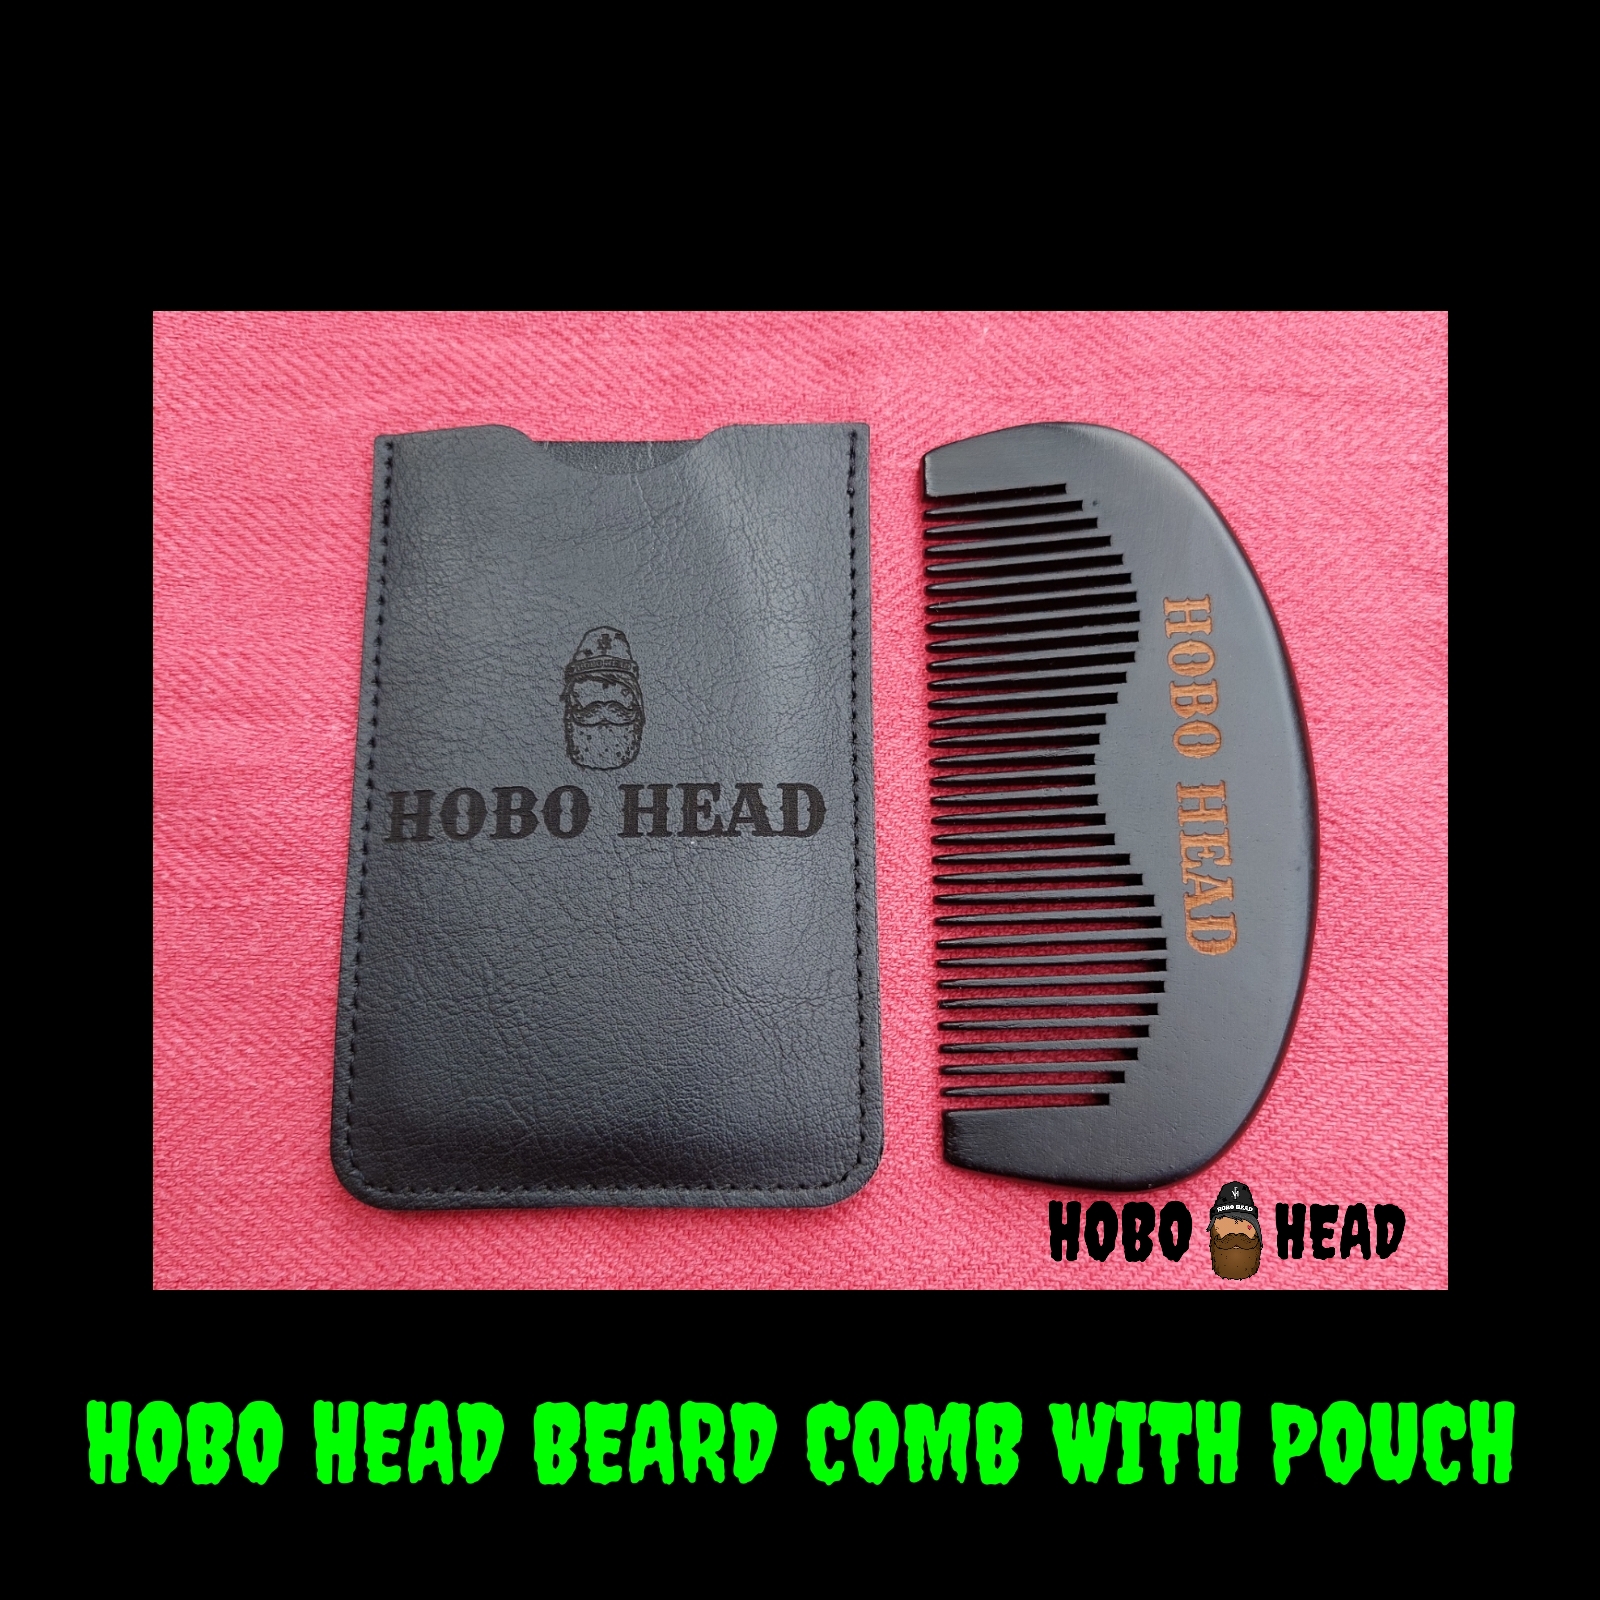 HOBO HEAD Beard Comb with pouch